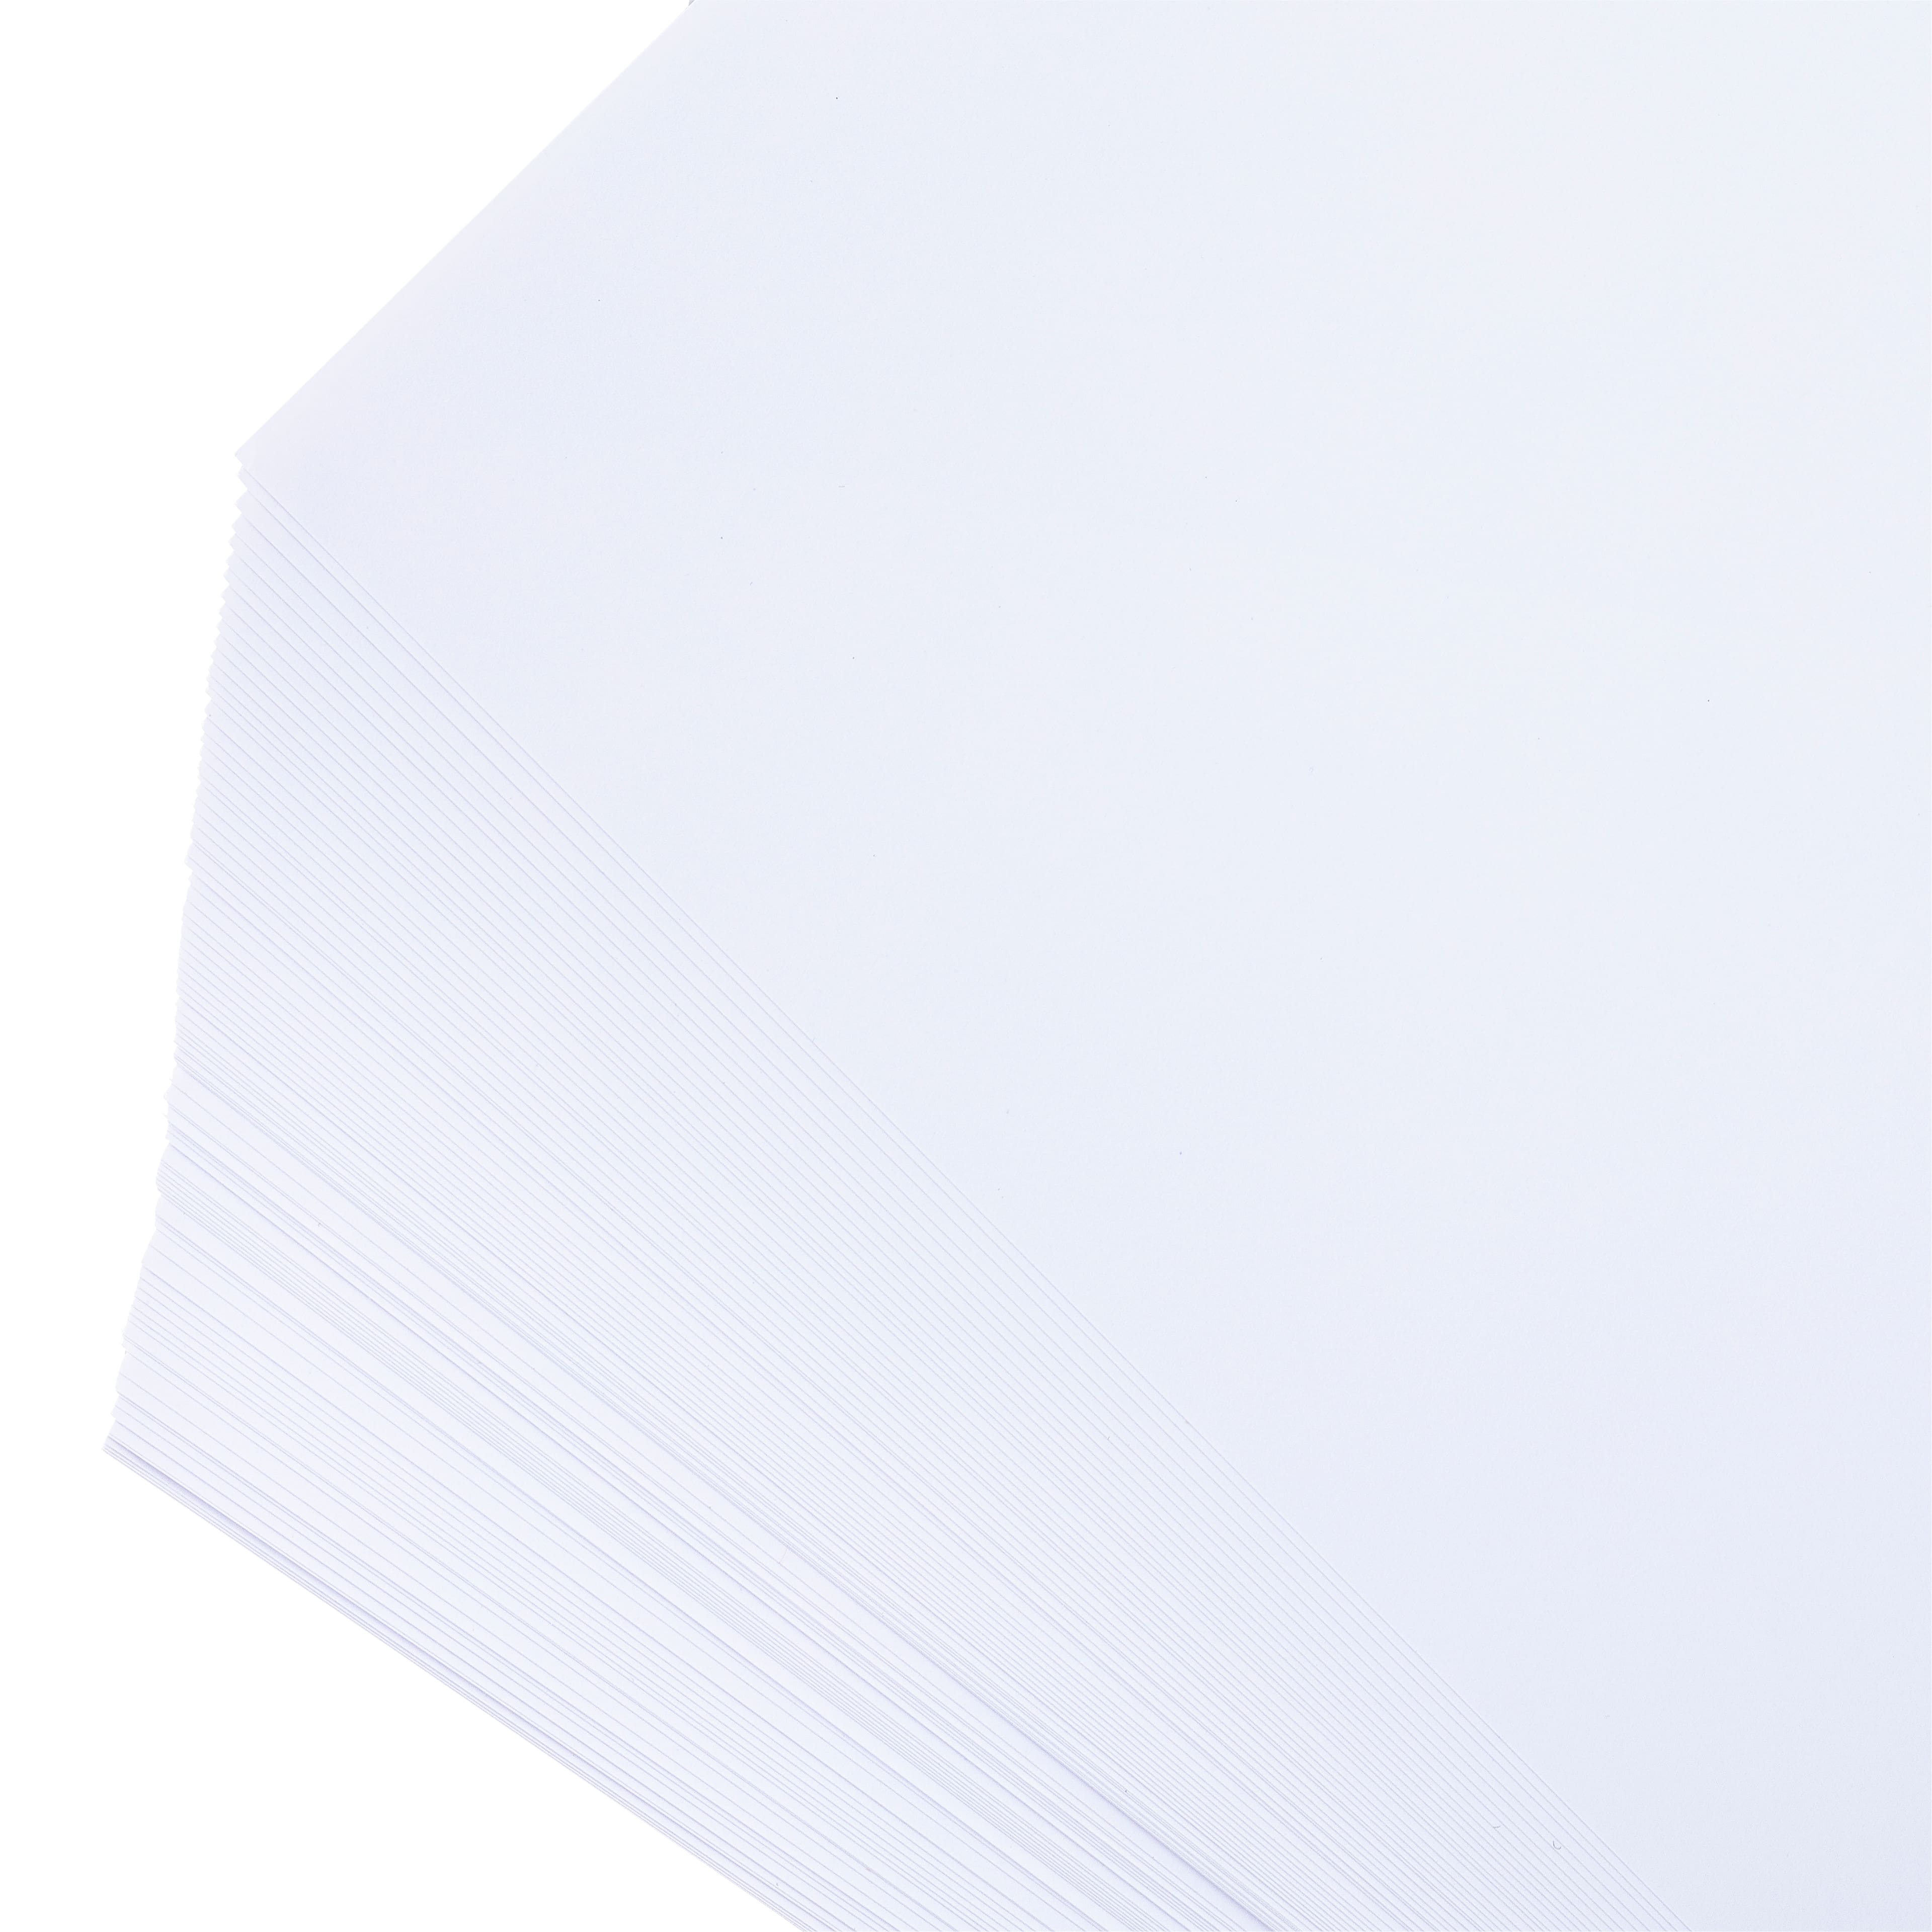 True Pix Classic Dye Sublimation Paper 8.5 x 11 - Pack of 100 sheets